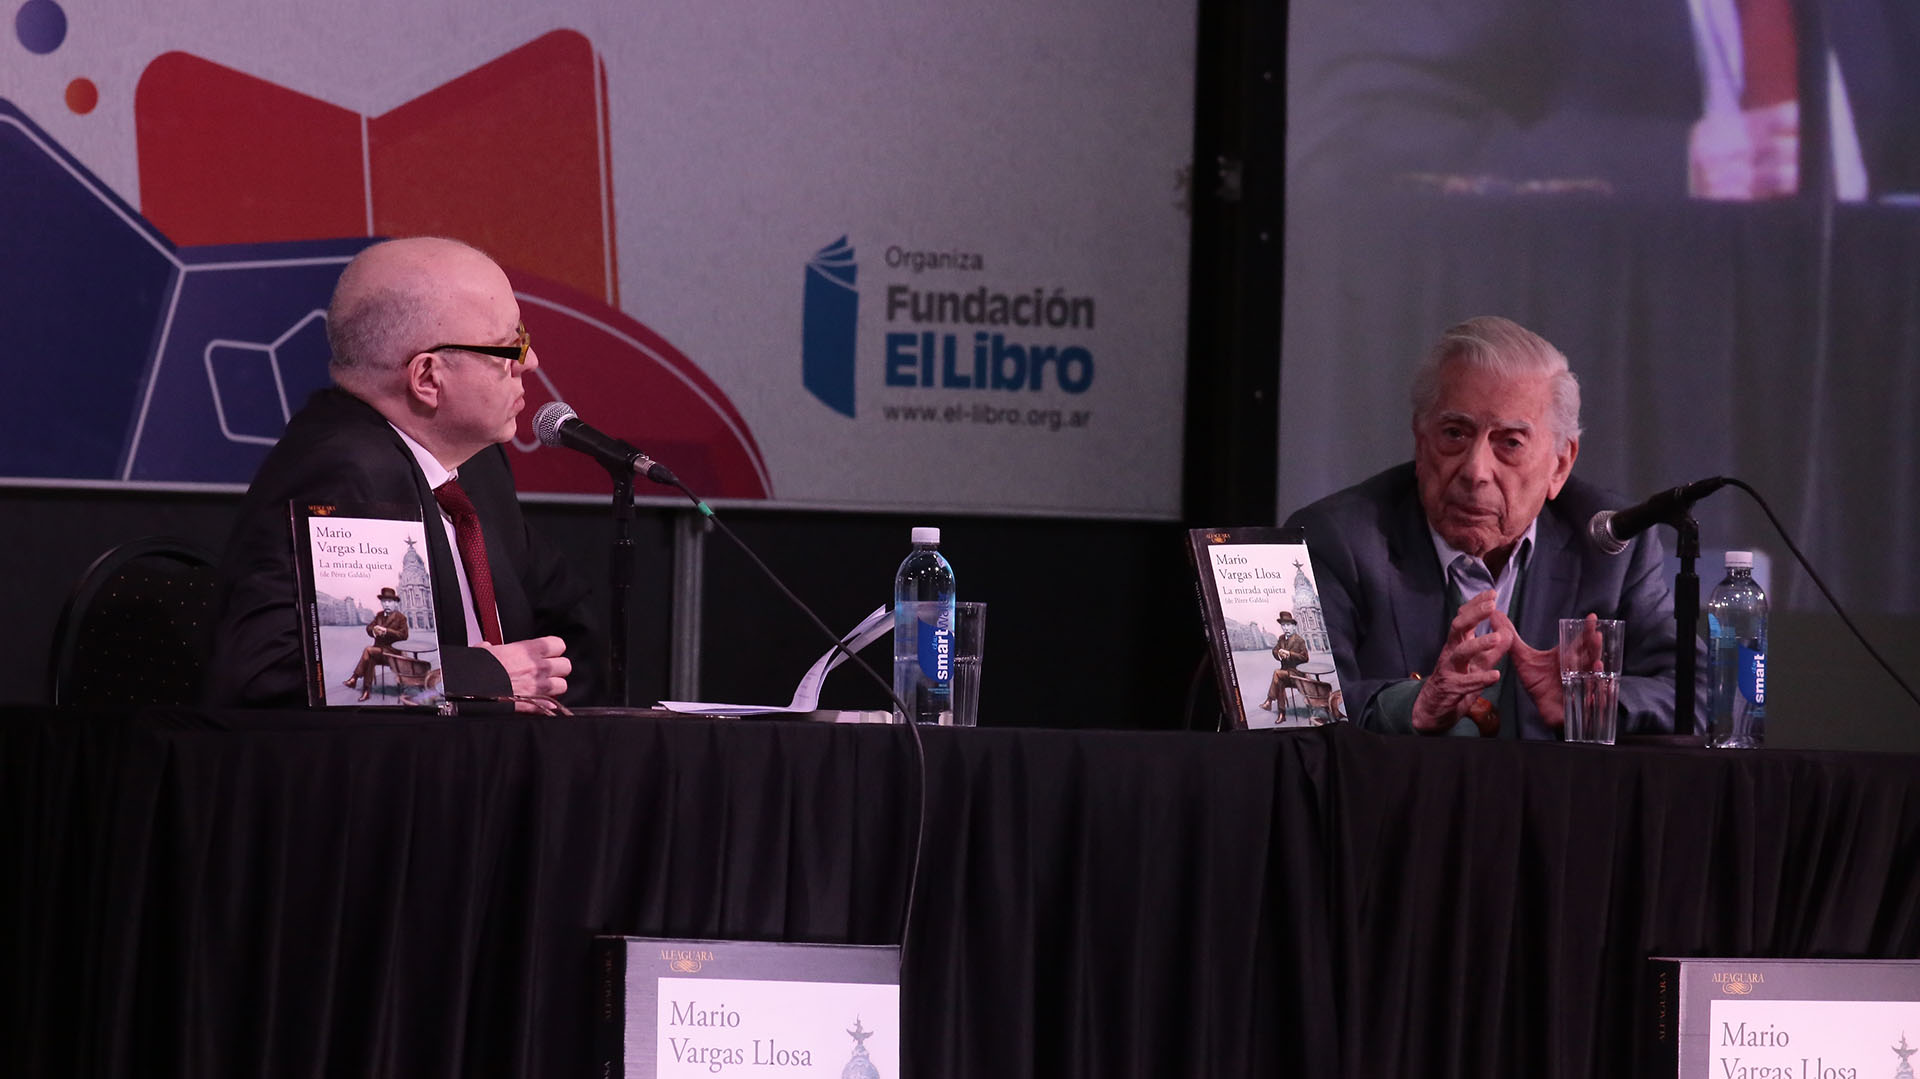 Jorge Fernández Díaz spoke with the Nobel Prize for Literature 